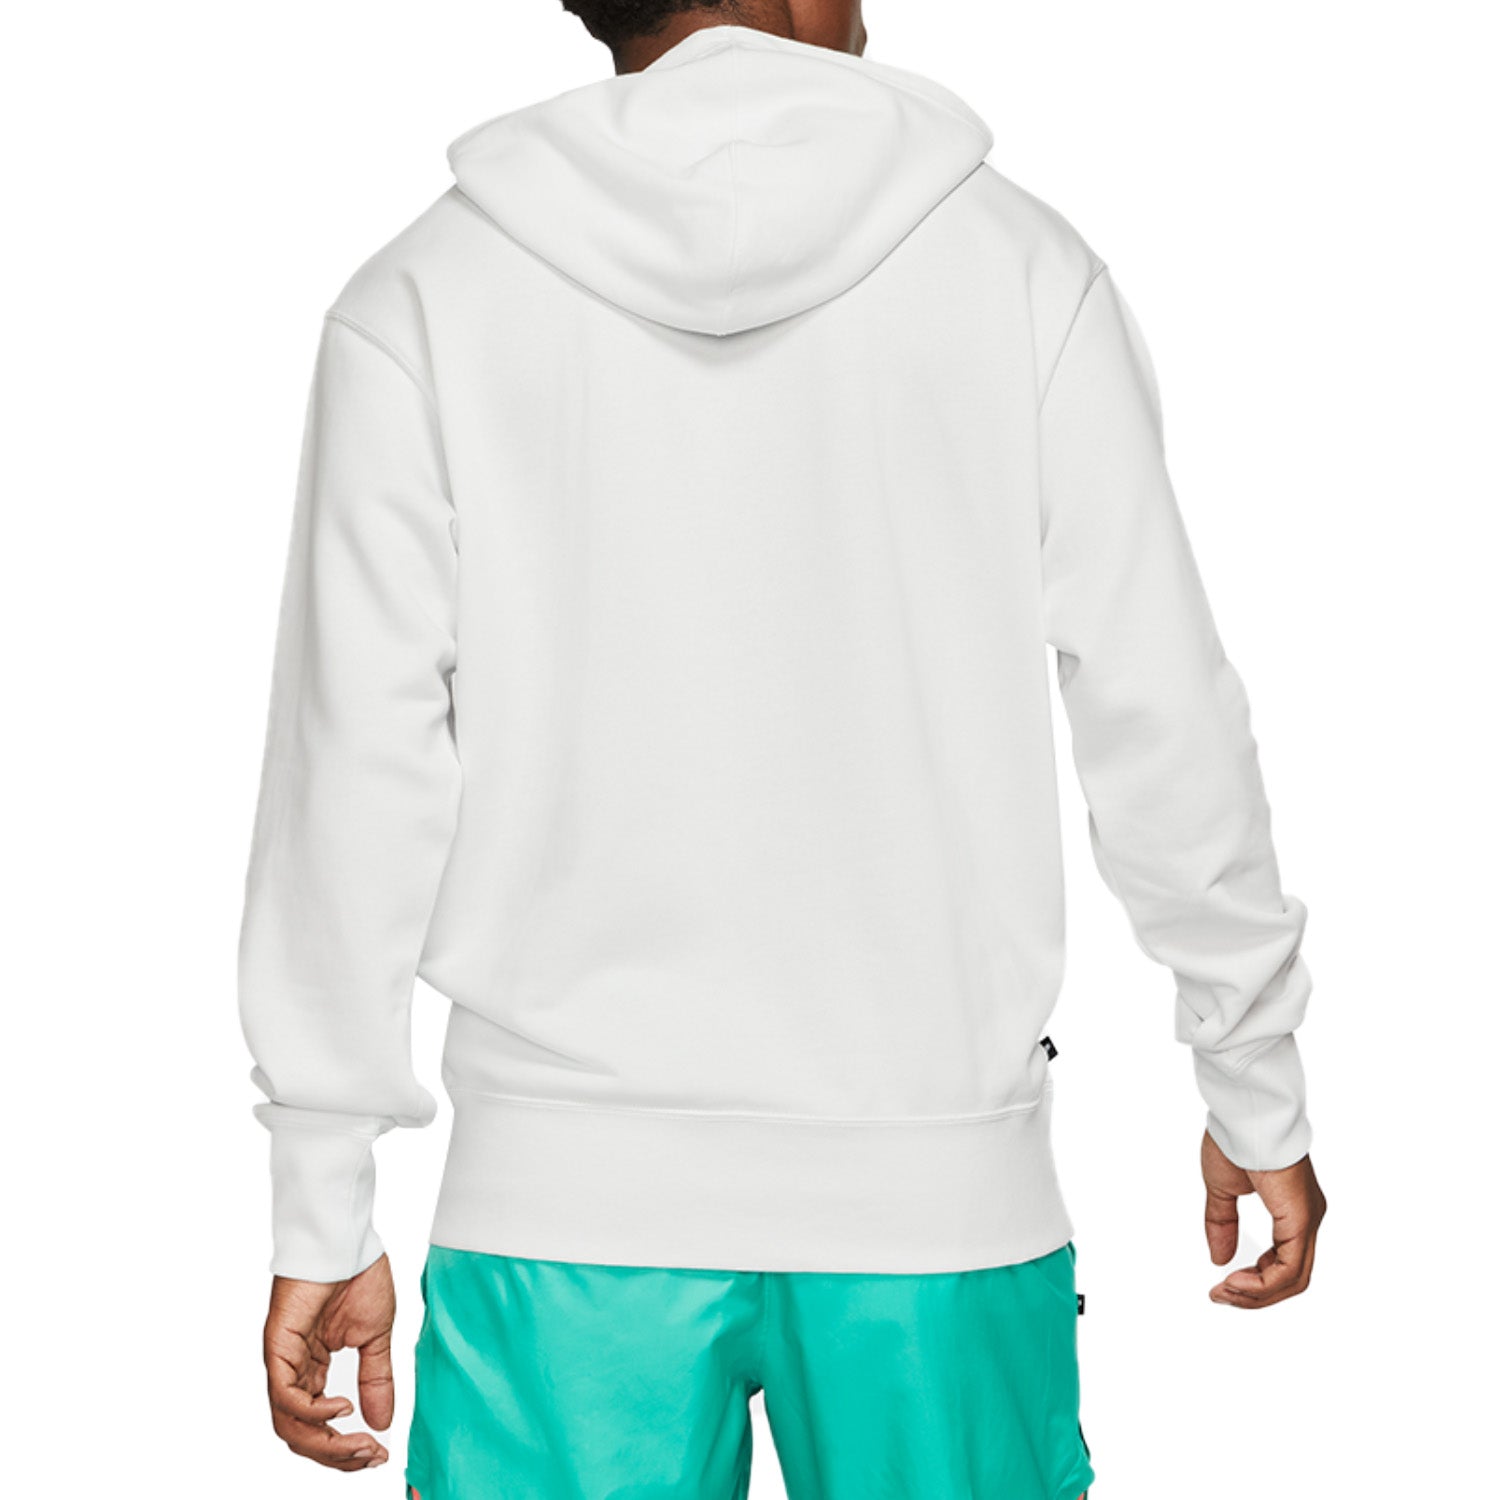 Nike Giannis "Freak" Pullover Hoodie Mens Style : Da5691